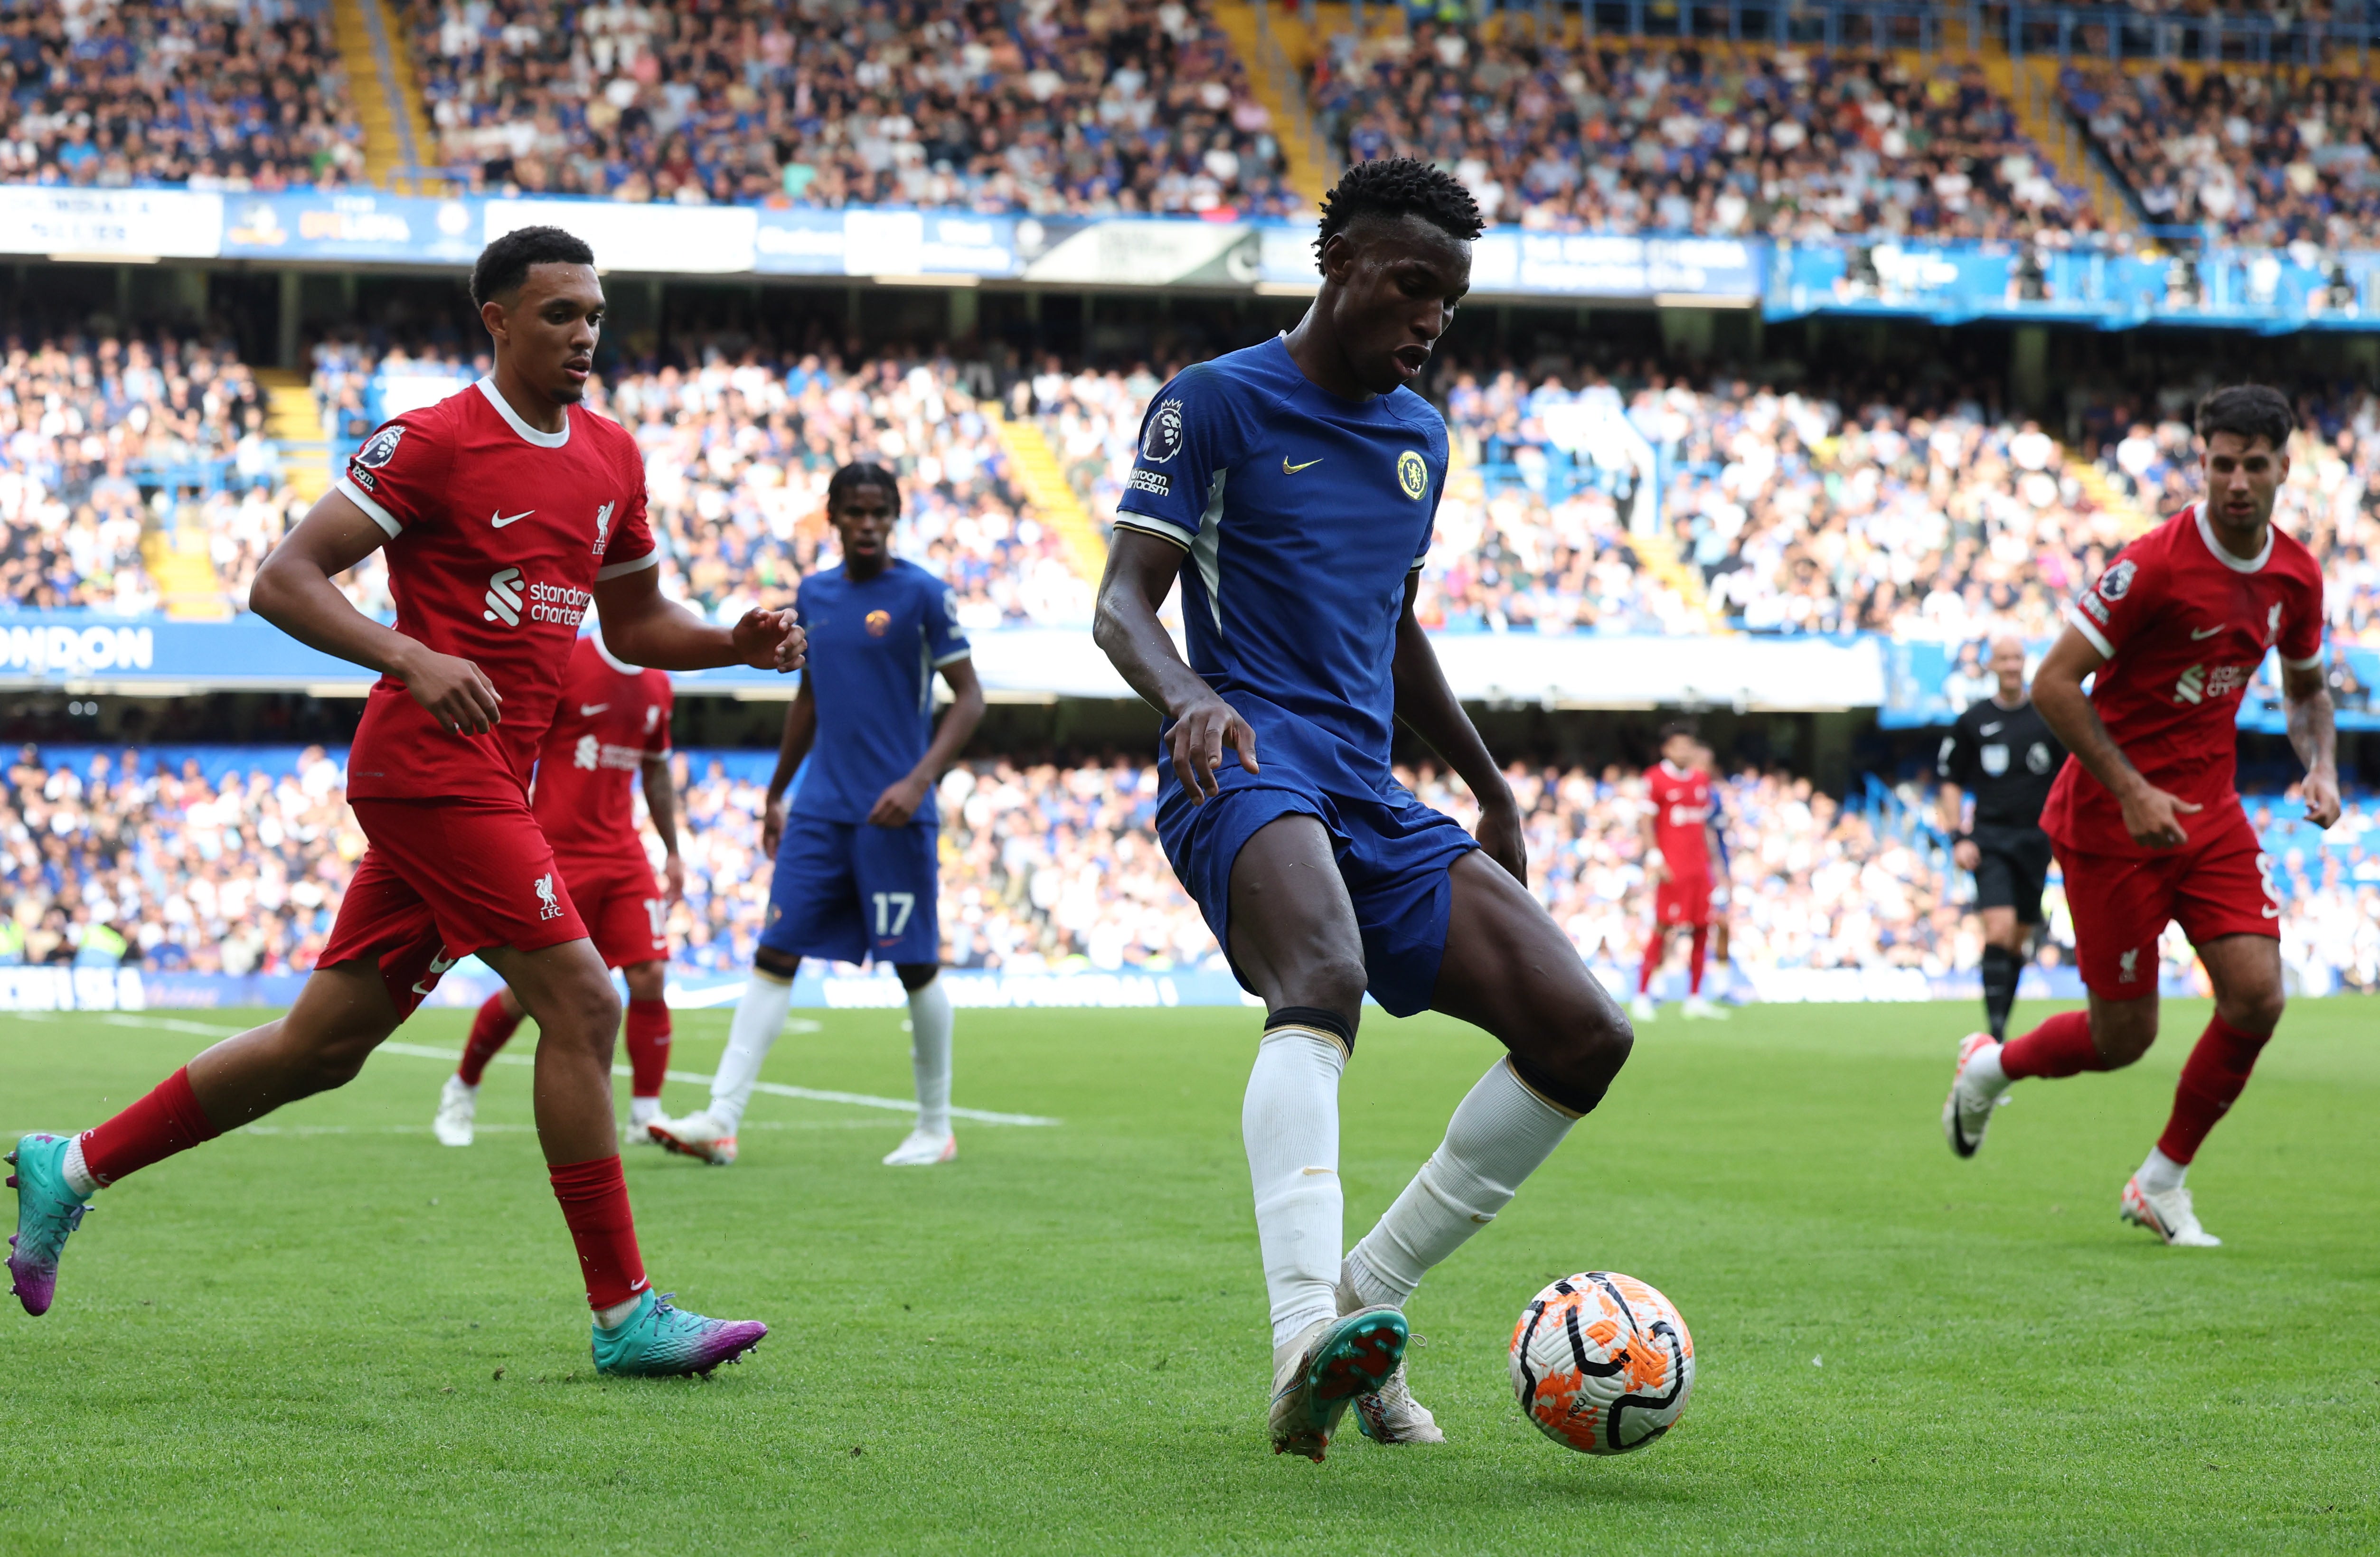 Nicolas Jackson impressed on his Chelsea debut